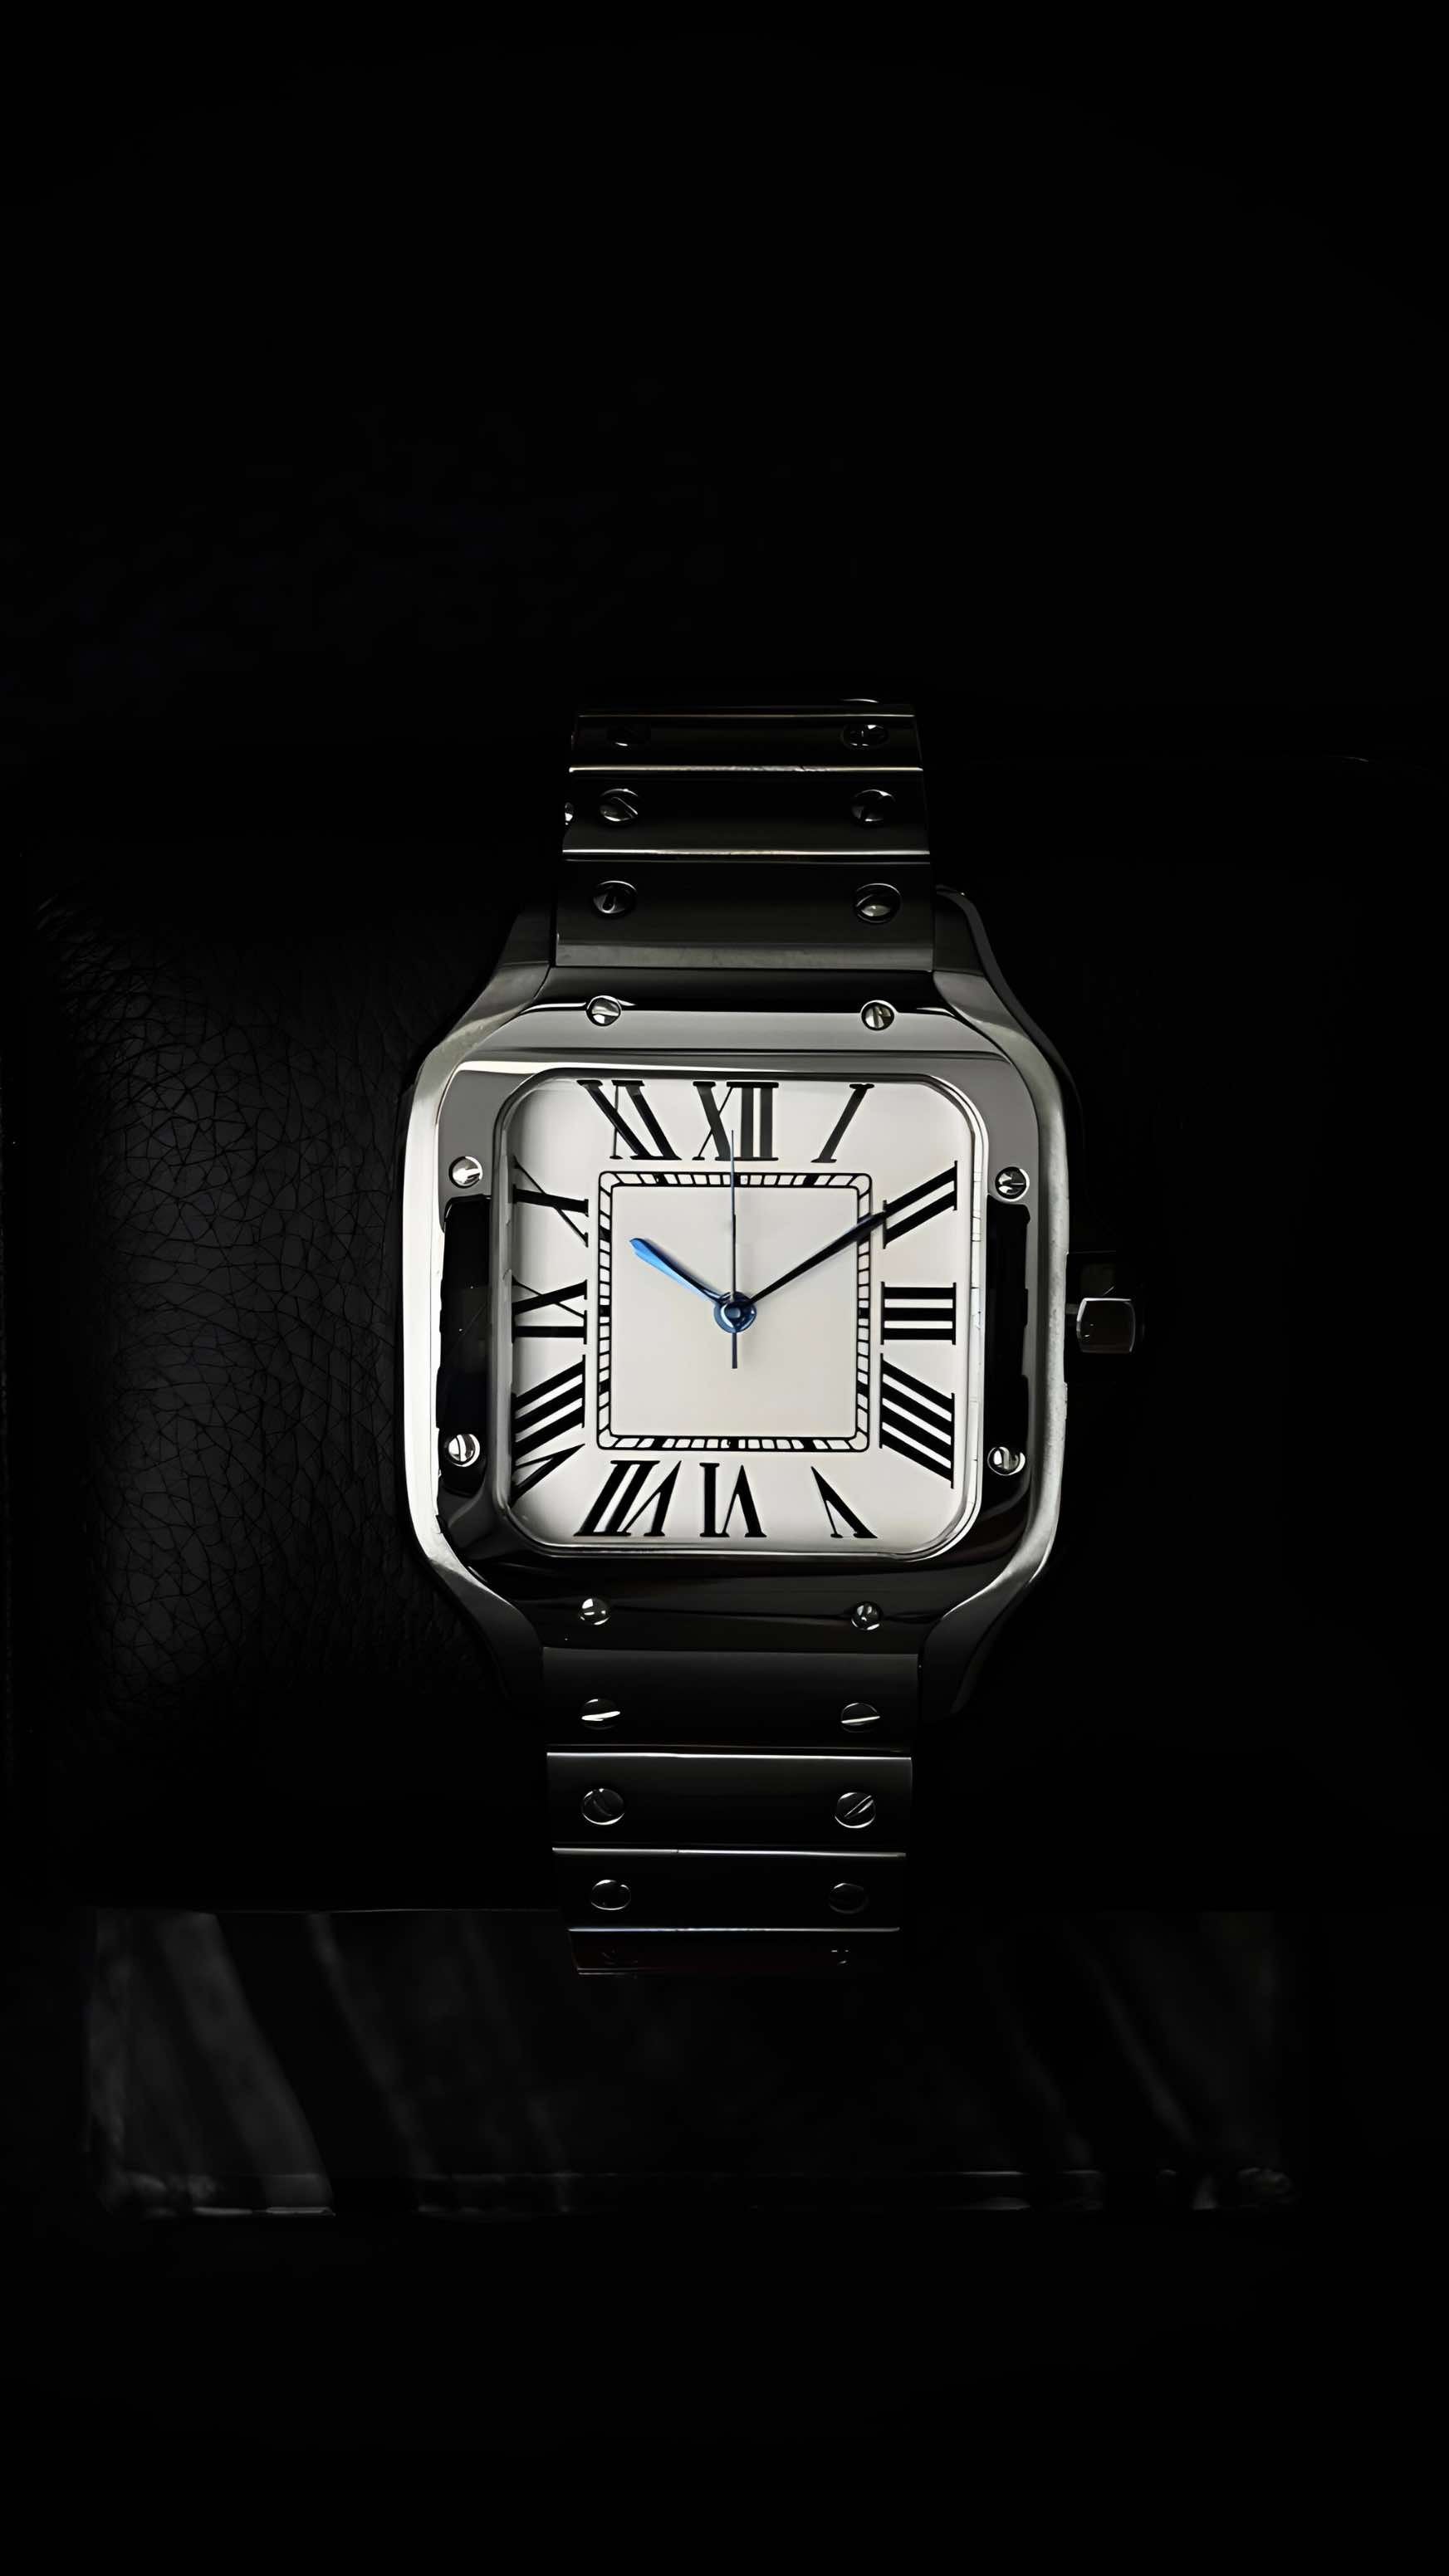 Seiko mod santos style watch collection - Circa Watch Labs